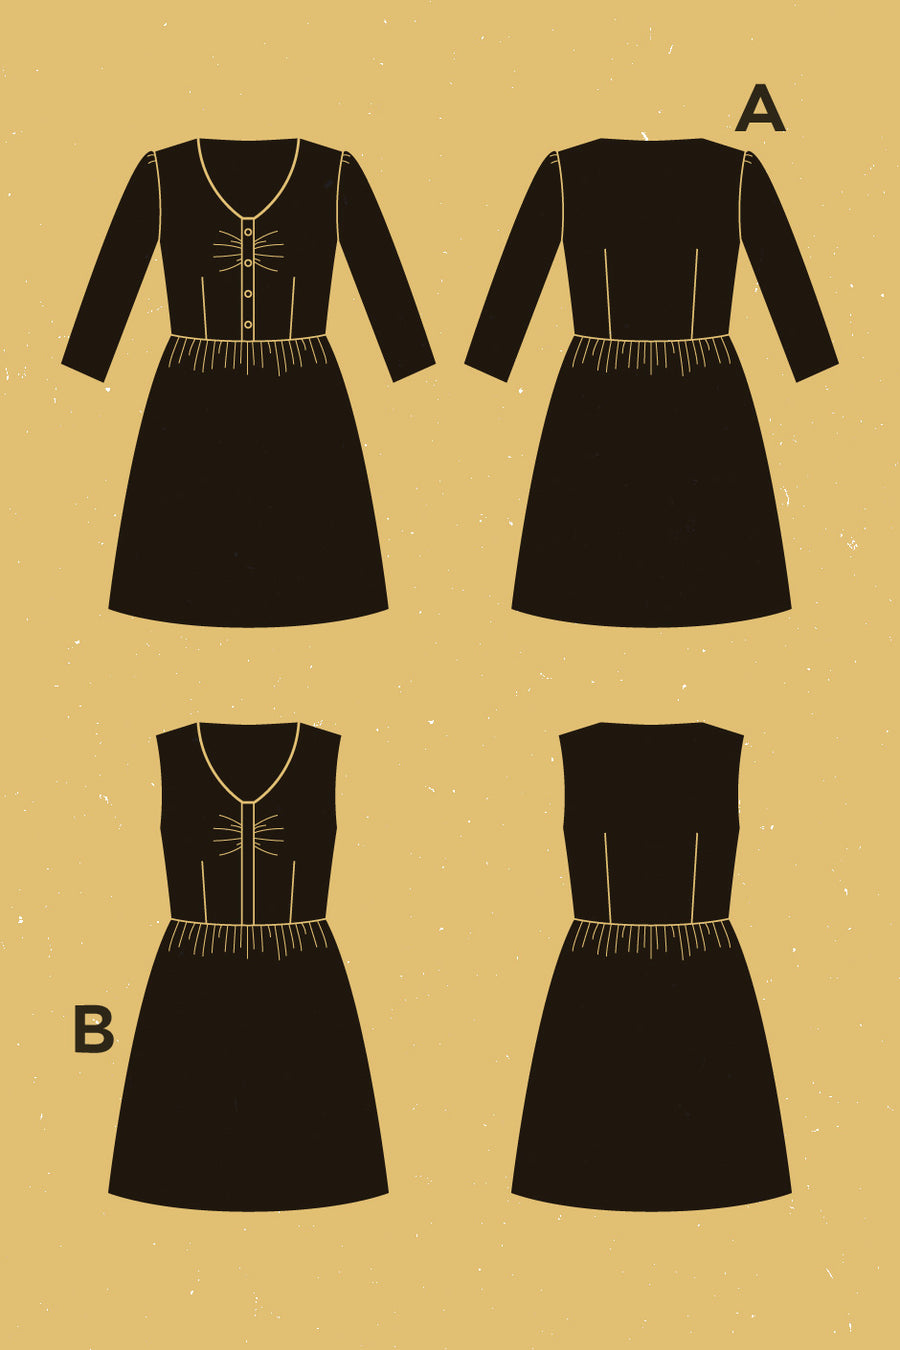 Sureau Dress Pattern | Patron de Sureau dress | Deer & Doe